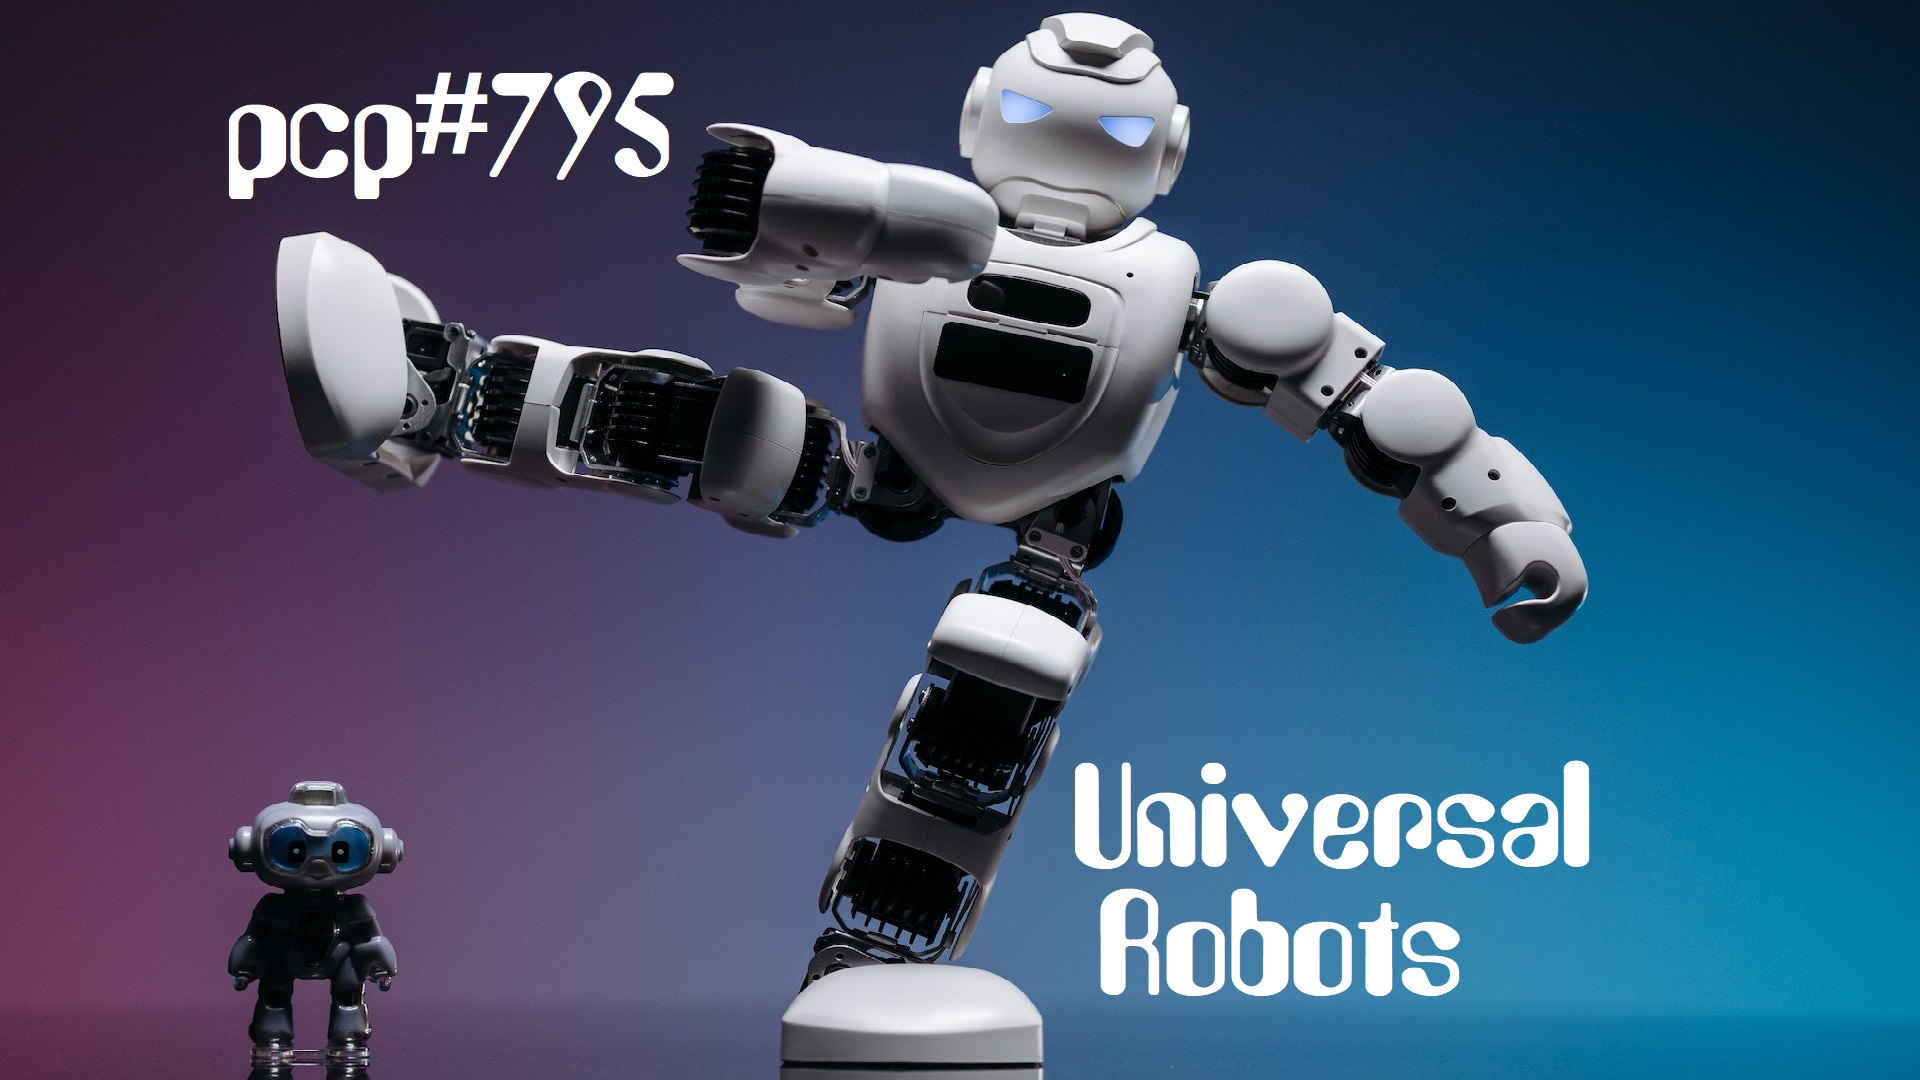 PCP#795... Universal Robots...